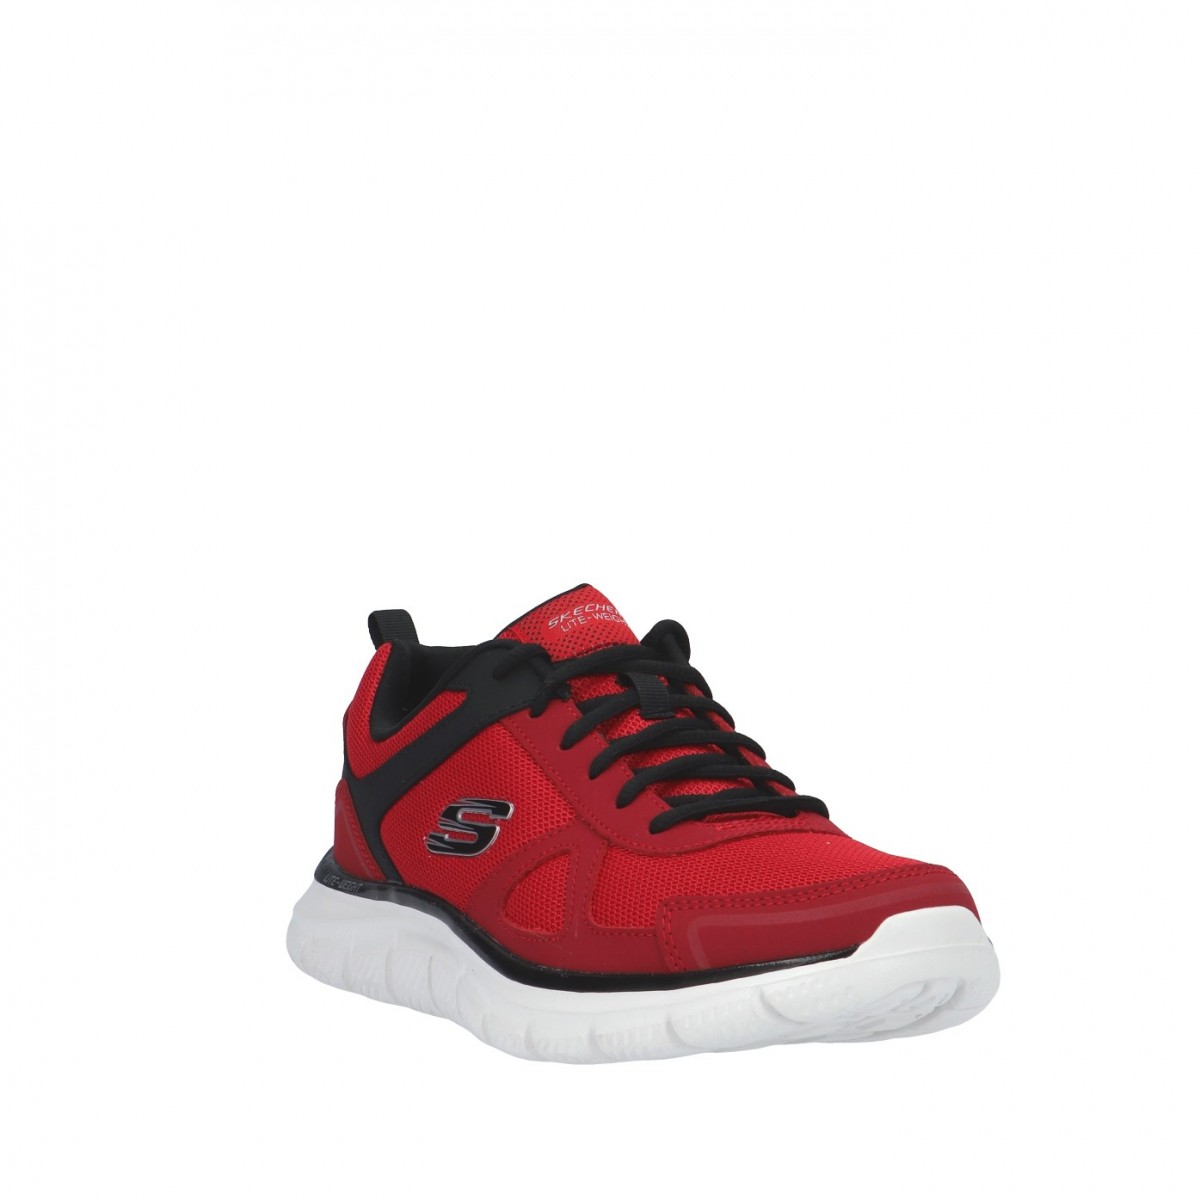 Skechers Sneaker Rosso/nero Gomma 52631